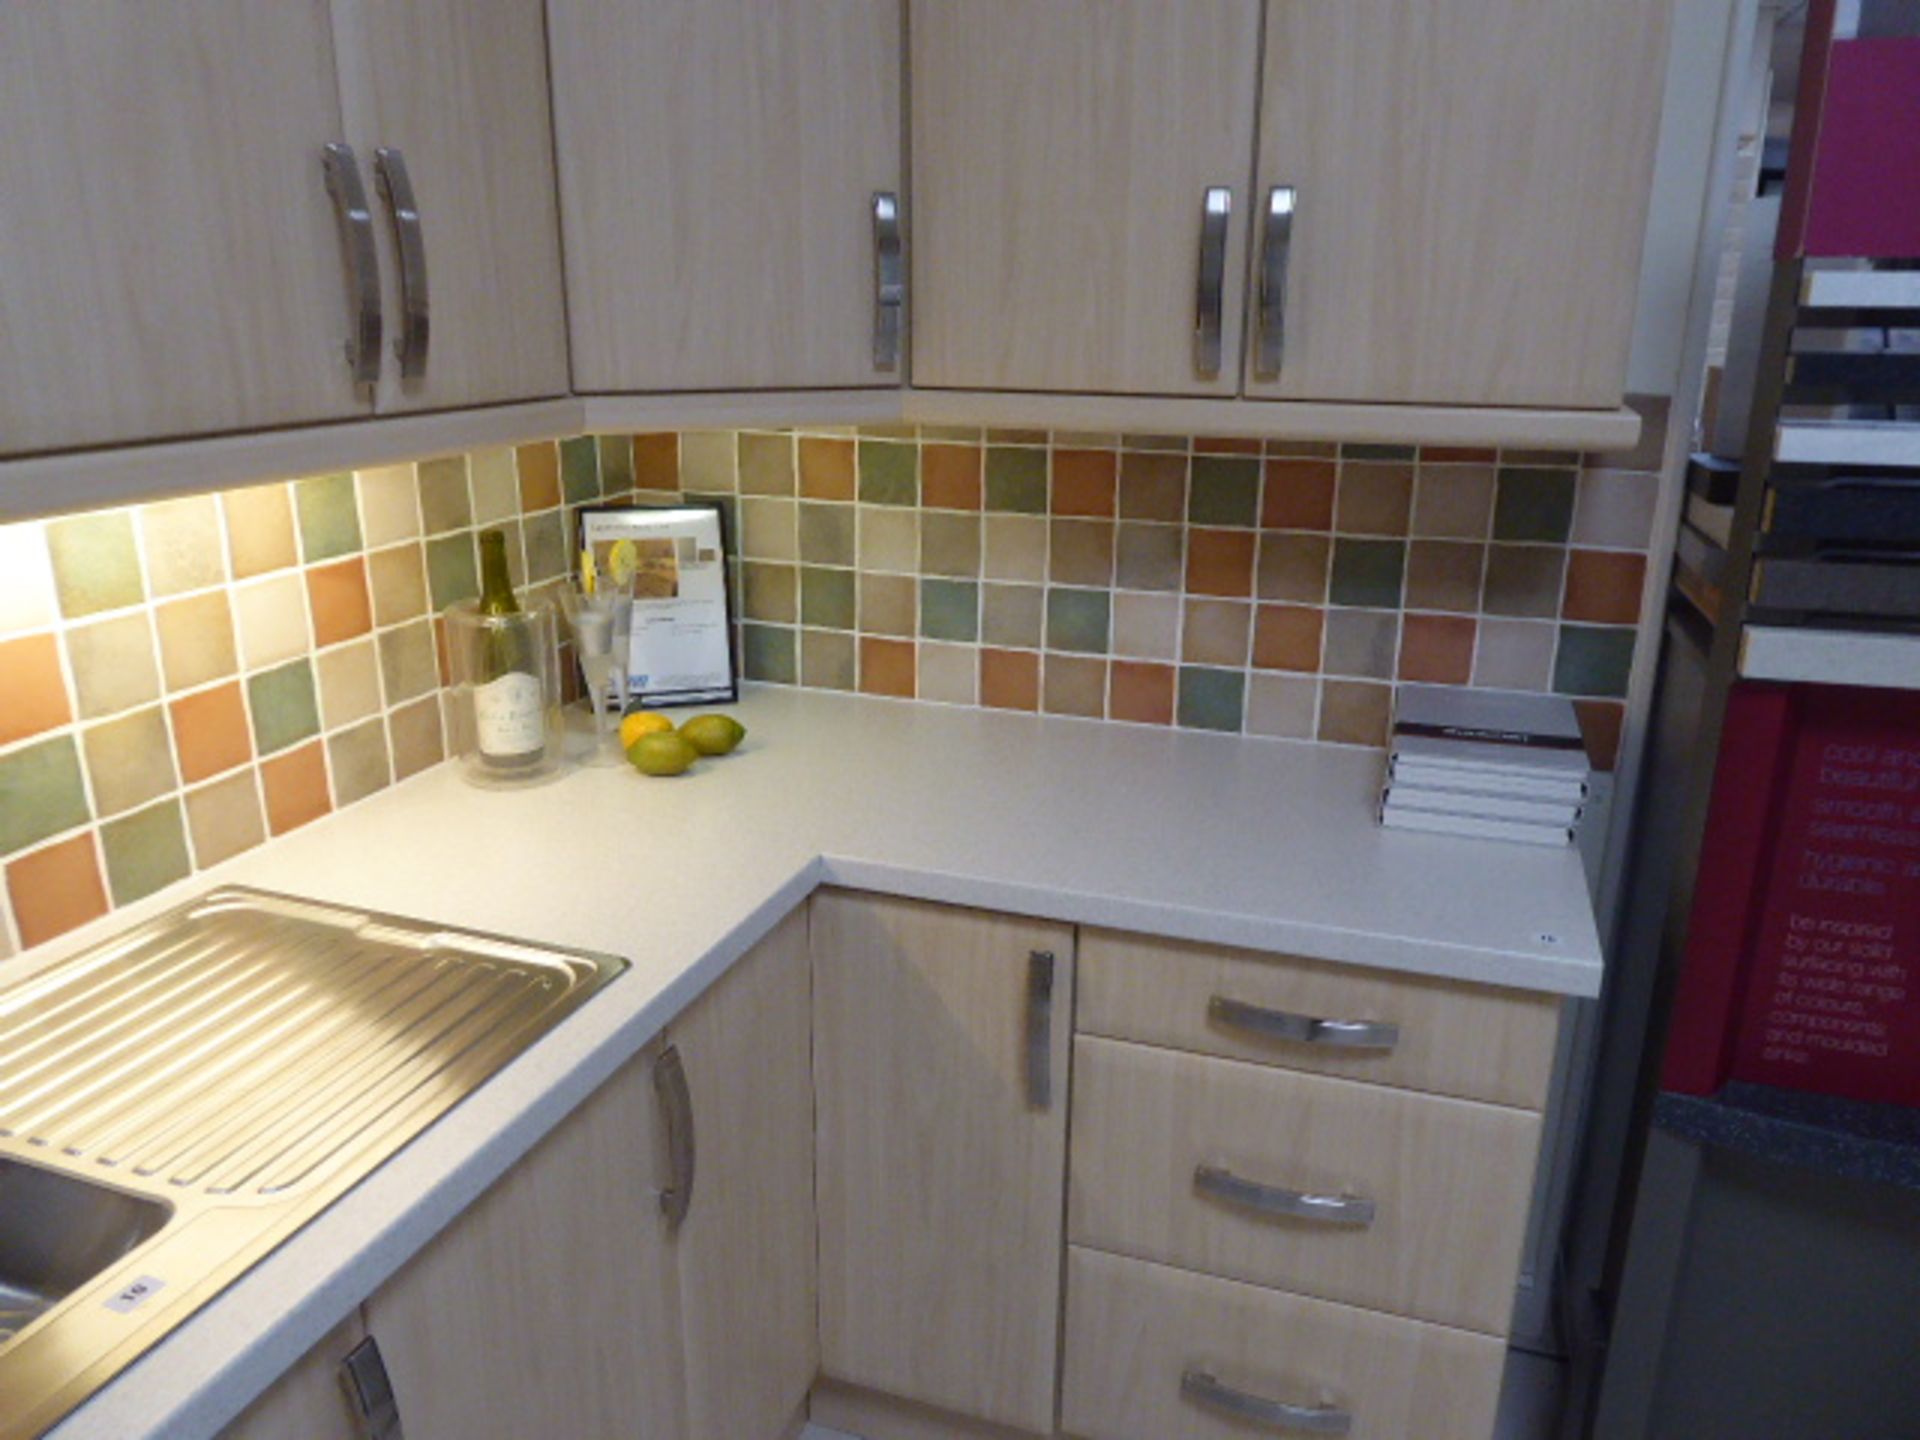 Saponetta Rose Pear kitchen in L-shape with a light grey granite effect worktop. Max dimension 190cm - Bild 3 aus 5